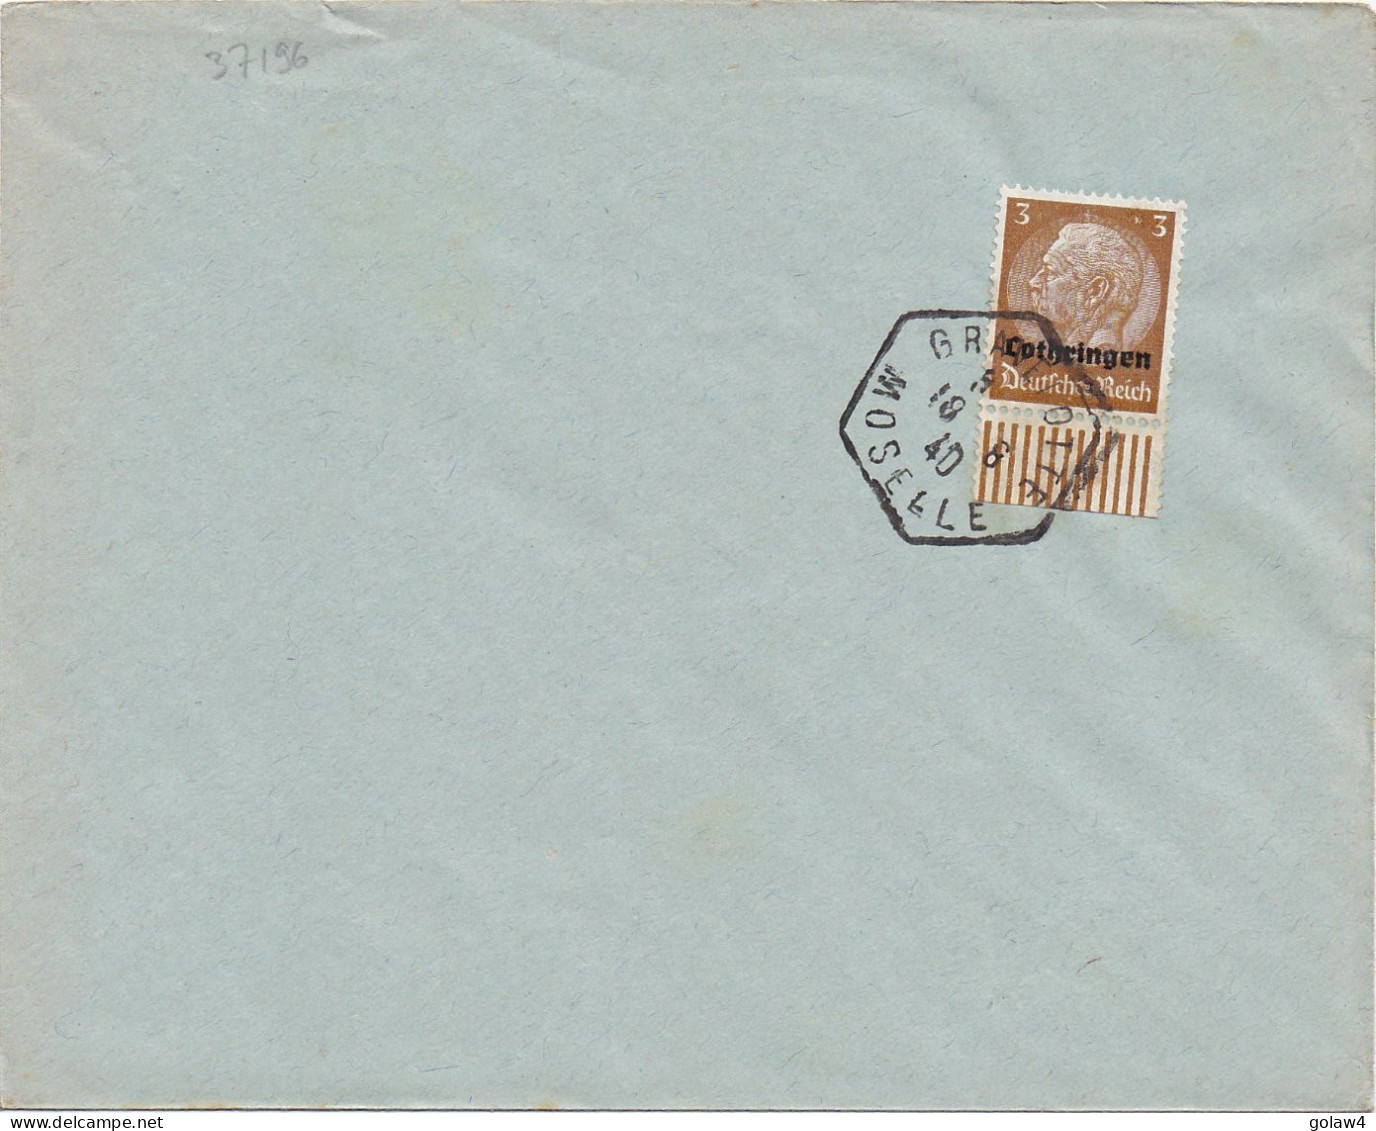 37196# HINDENBURG LOTHRINGEN LETTRE Obl GRAVELOTTE MOSELLE 18 Aout 1940 - Lettres & Documents